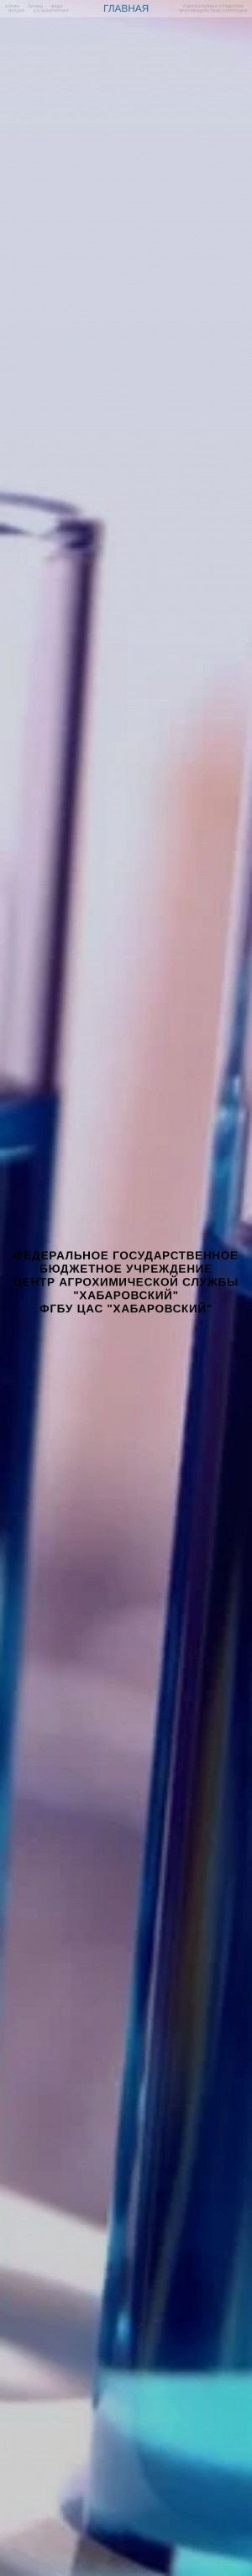 Предпросмотр для agrohimlab.ru — ФГБУ Цас Хабаровский